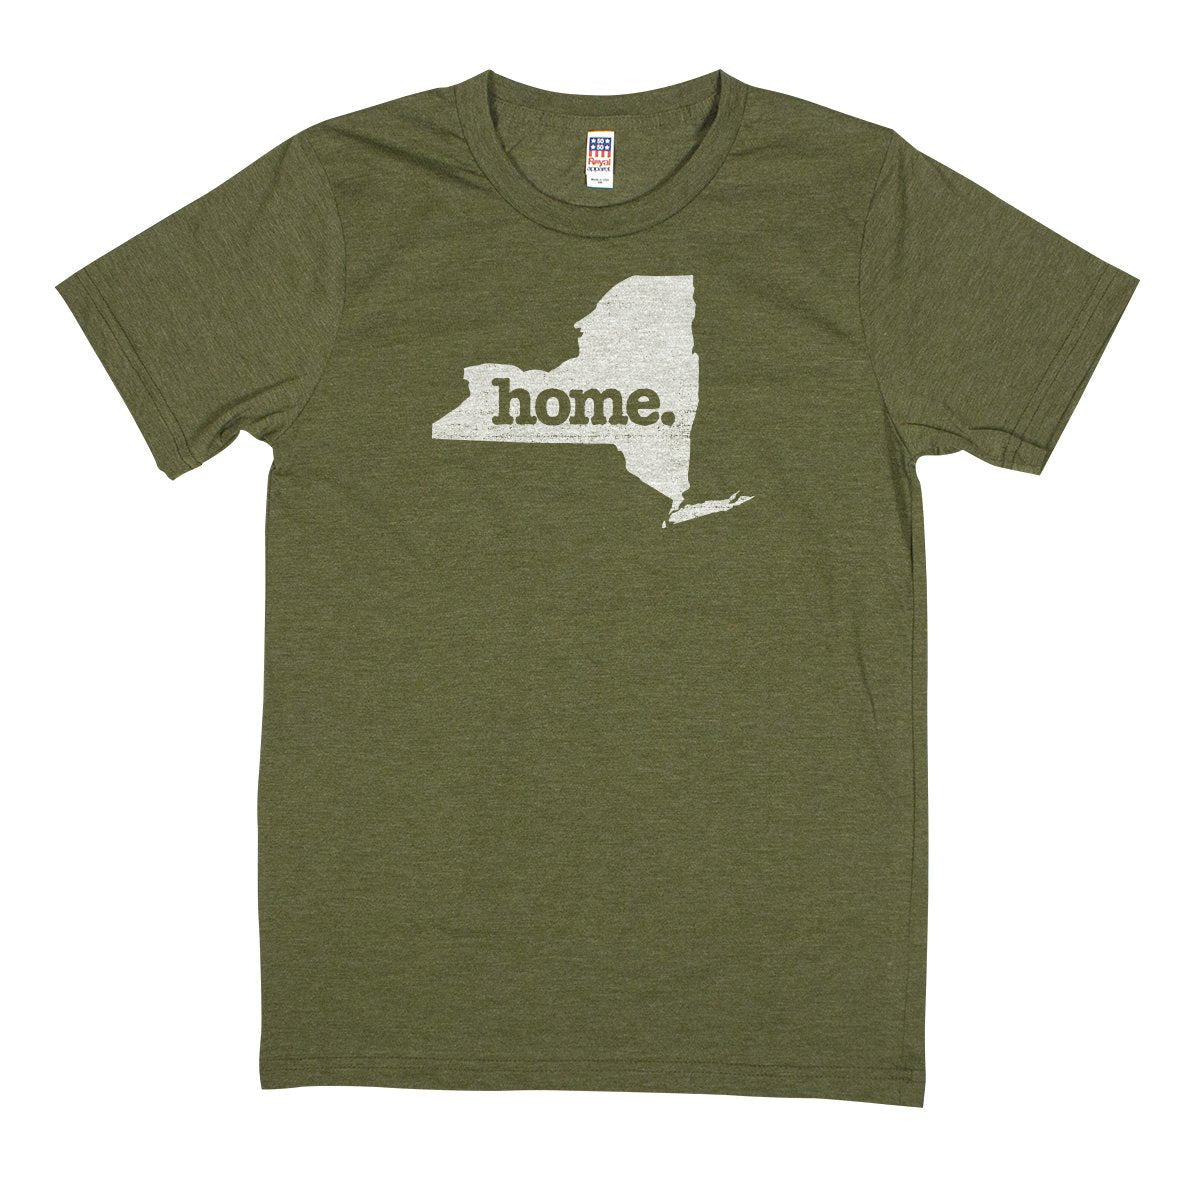 home. Men’s Unisex T-Shirt - New Hampshire